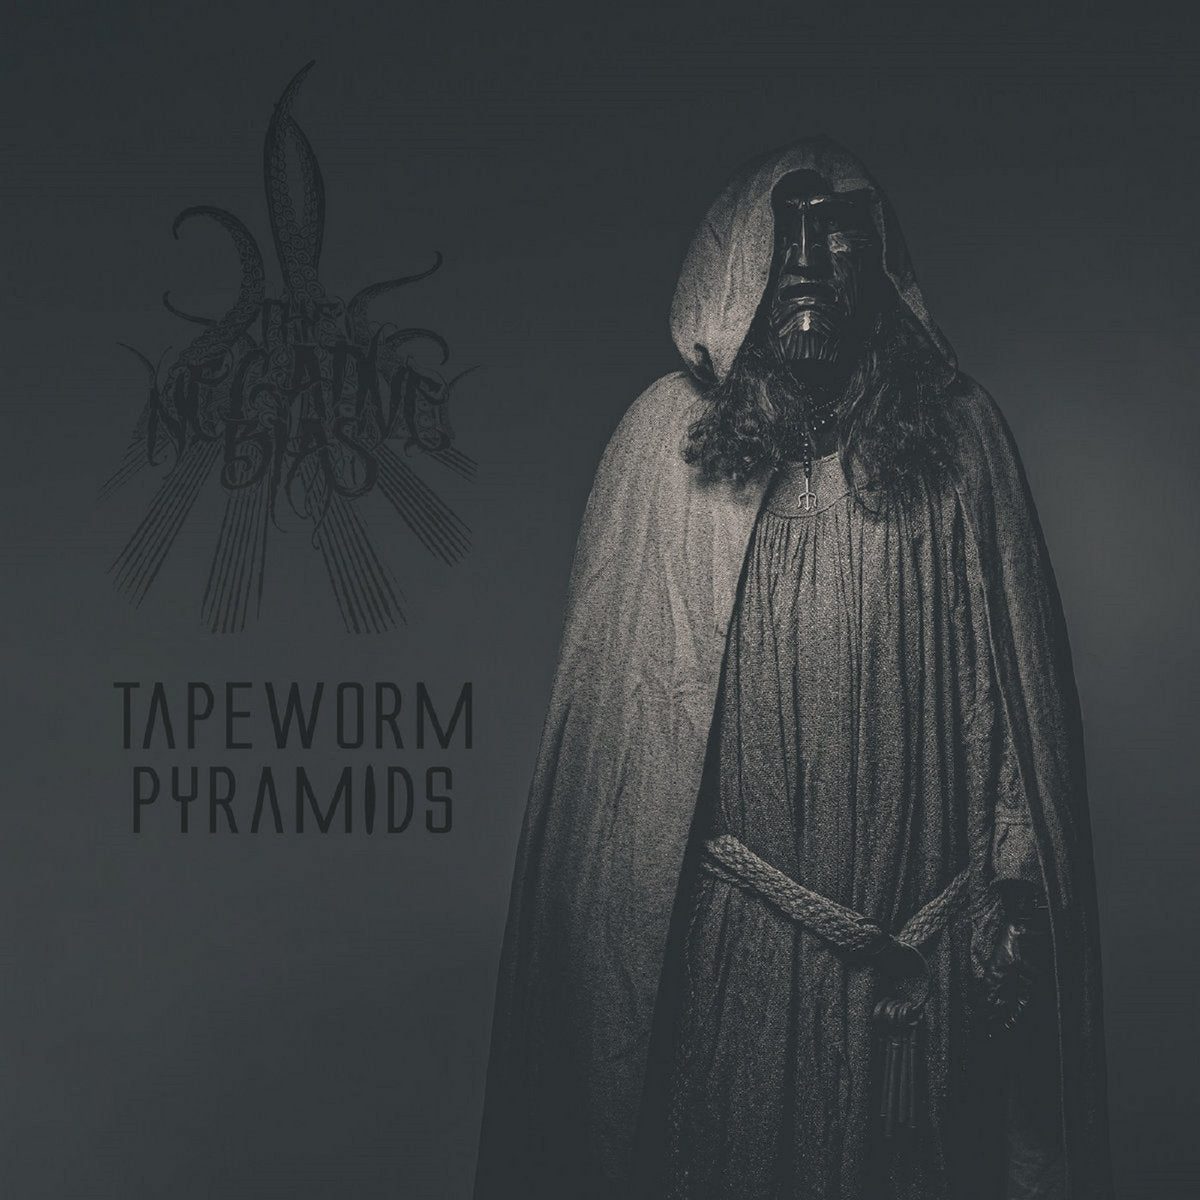 THE NEGATIVE BIAS "Tapeworm Pyramids" LP